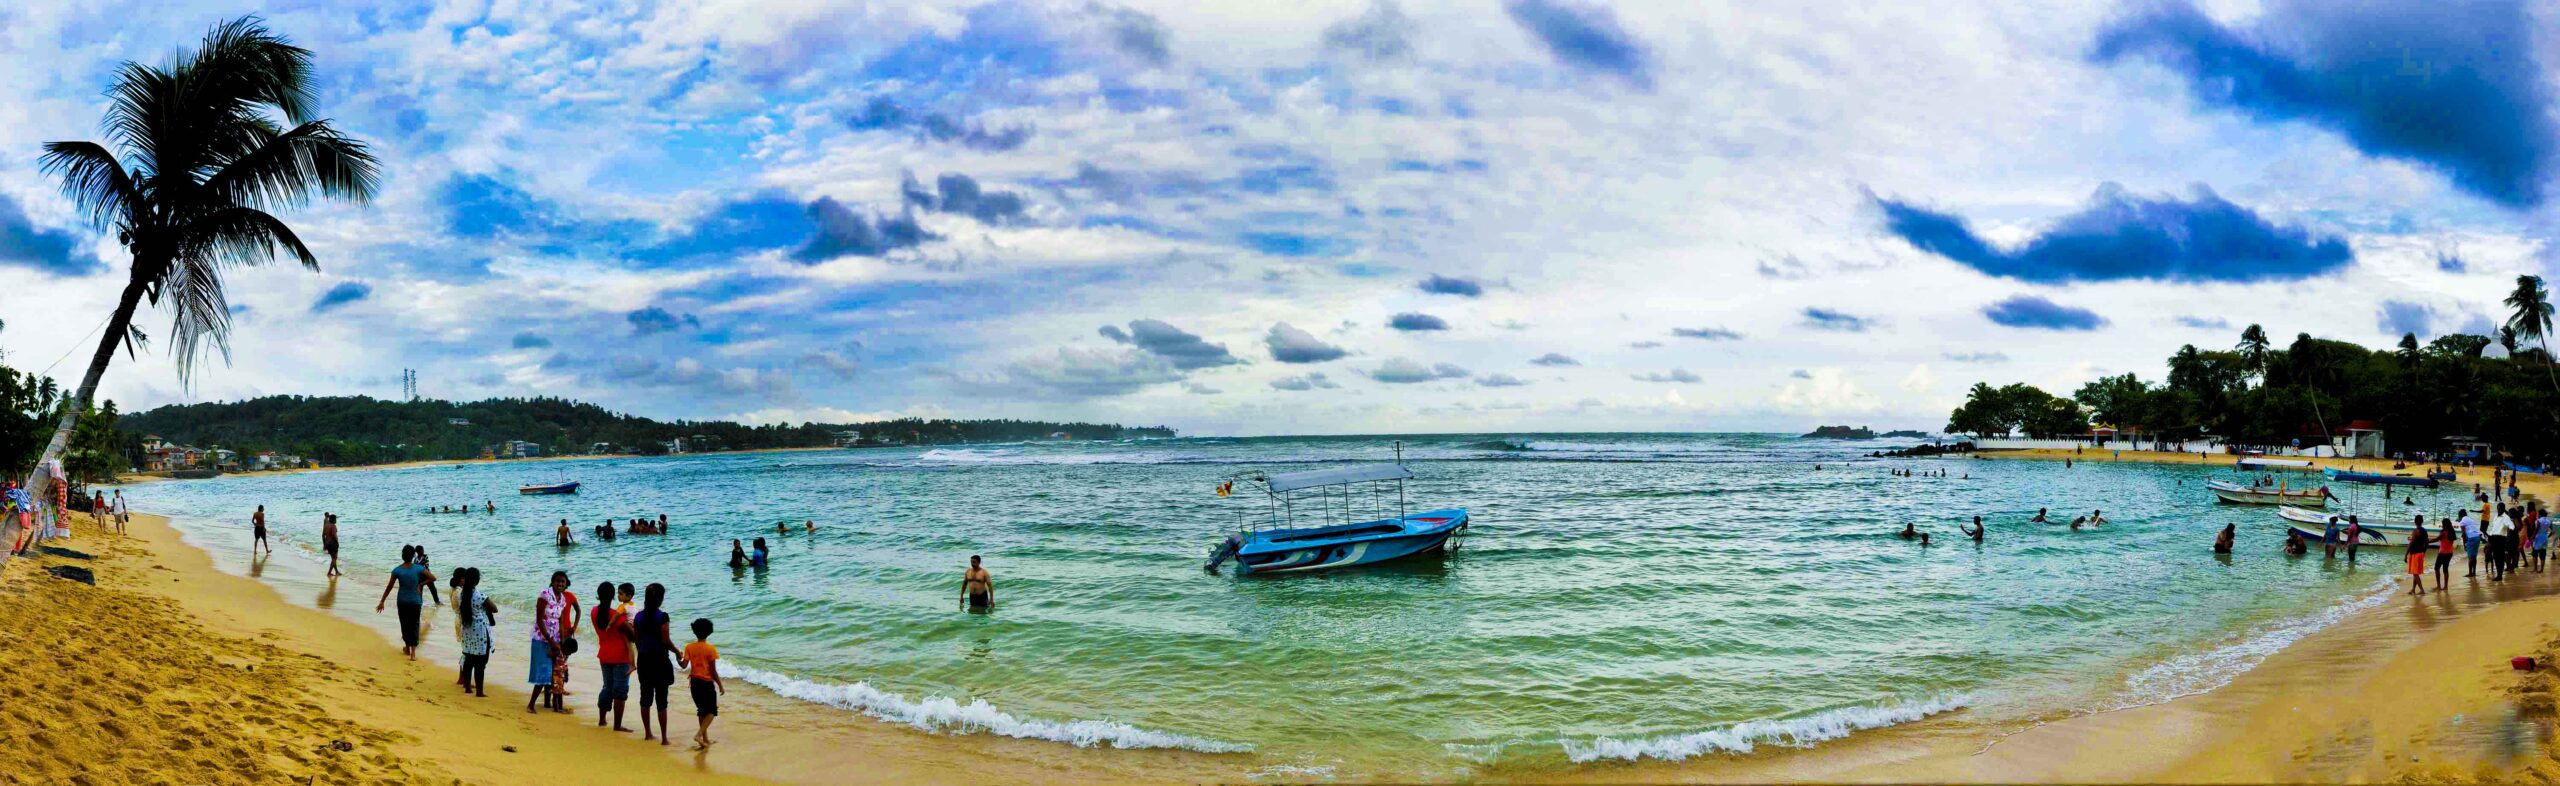 Sri-Lanka-Tourism-Hub-Beach